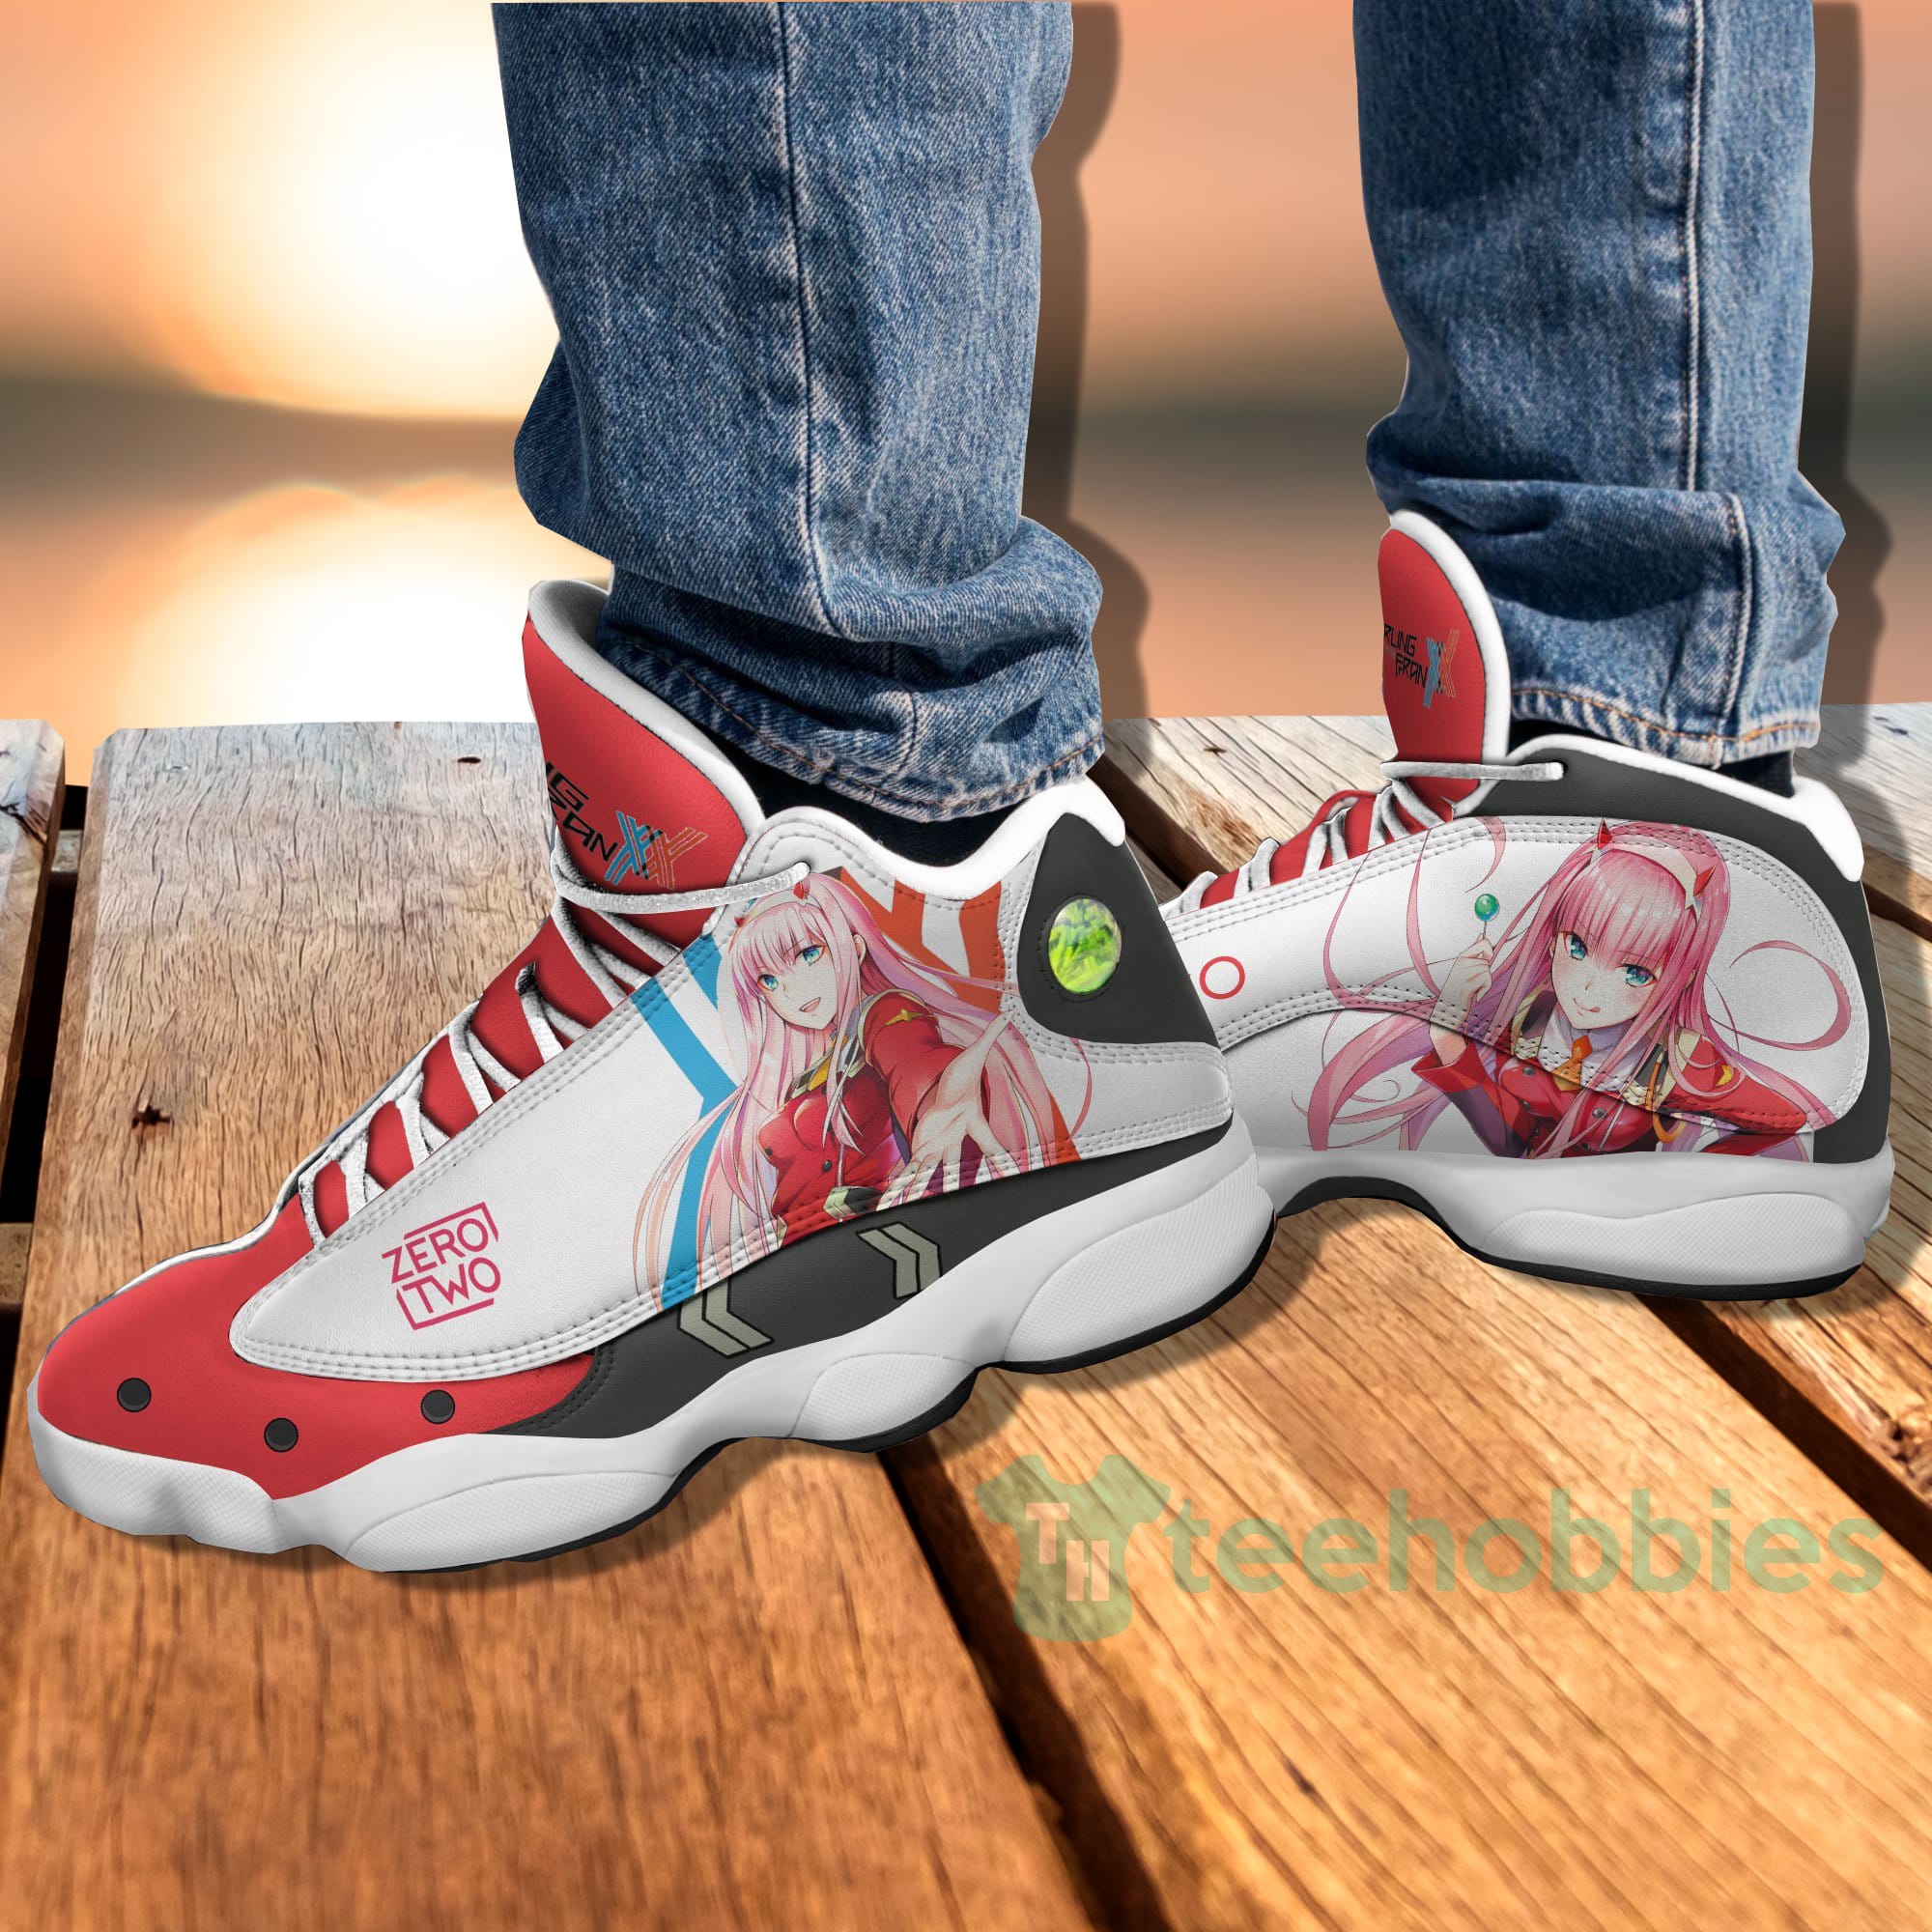 Zero Two Custom Darling In The Franxx Anime Air Jordan 13 Shoes Product photo 2